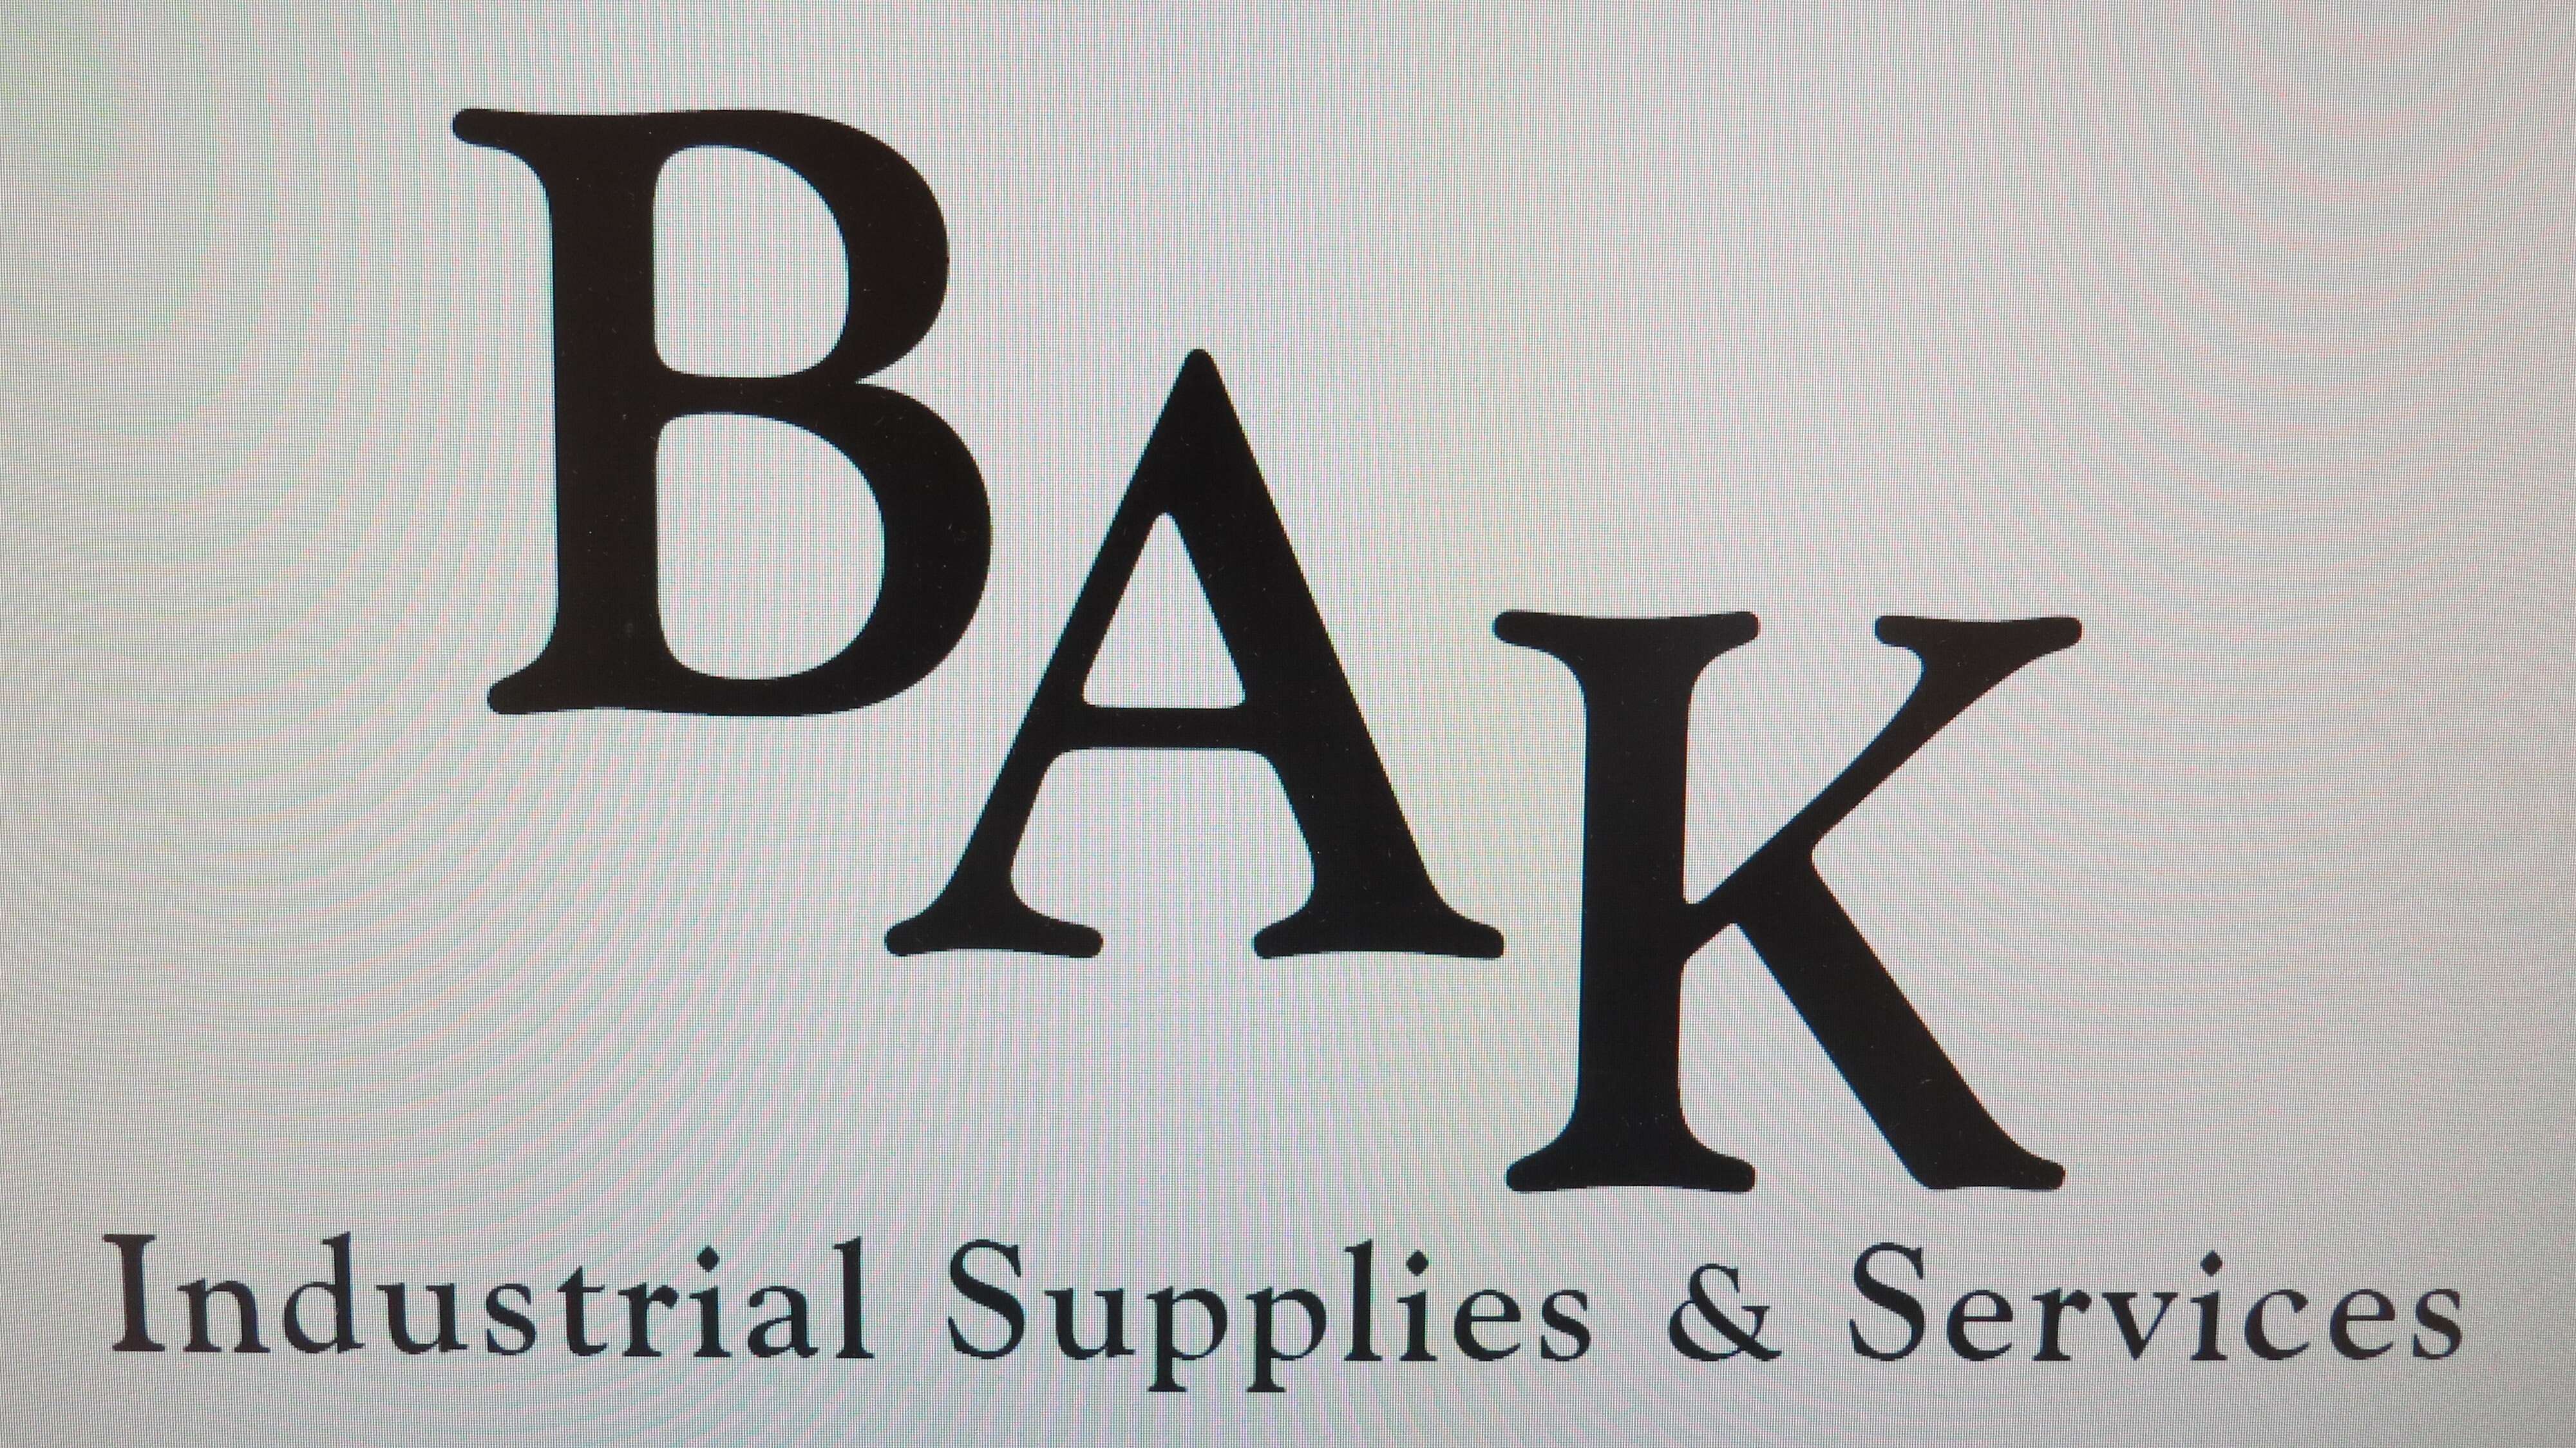 BAK industrial Supplies & Services